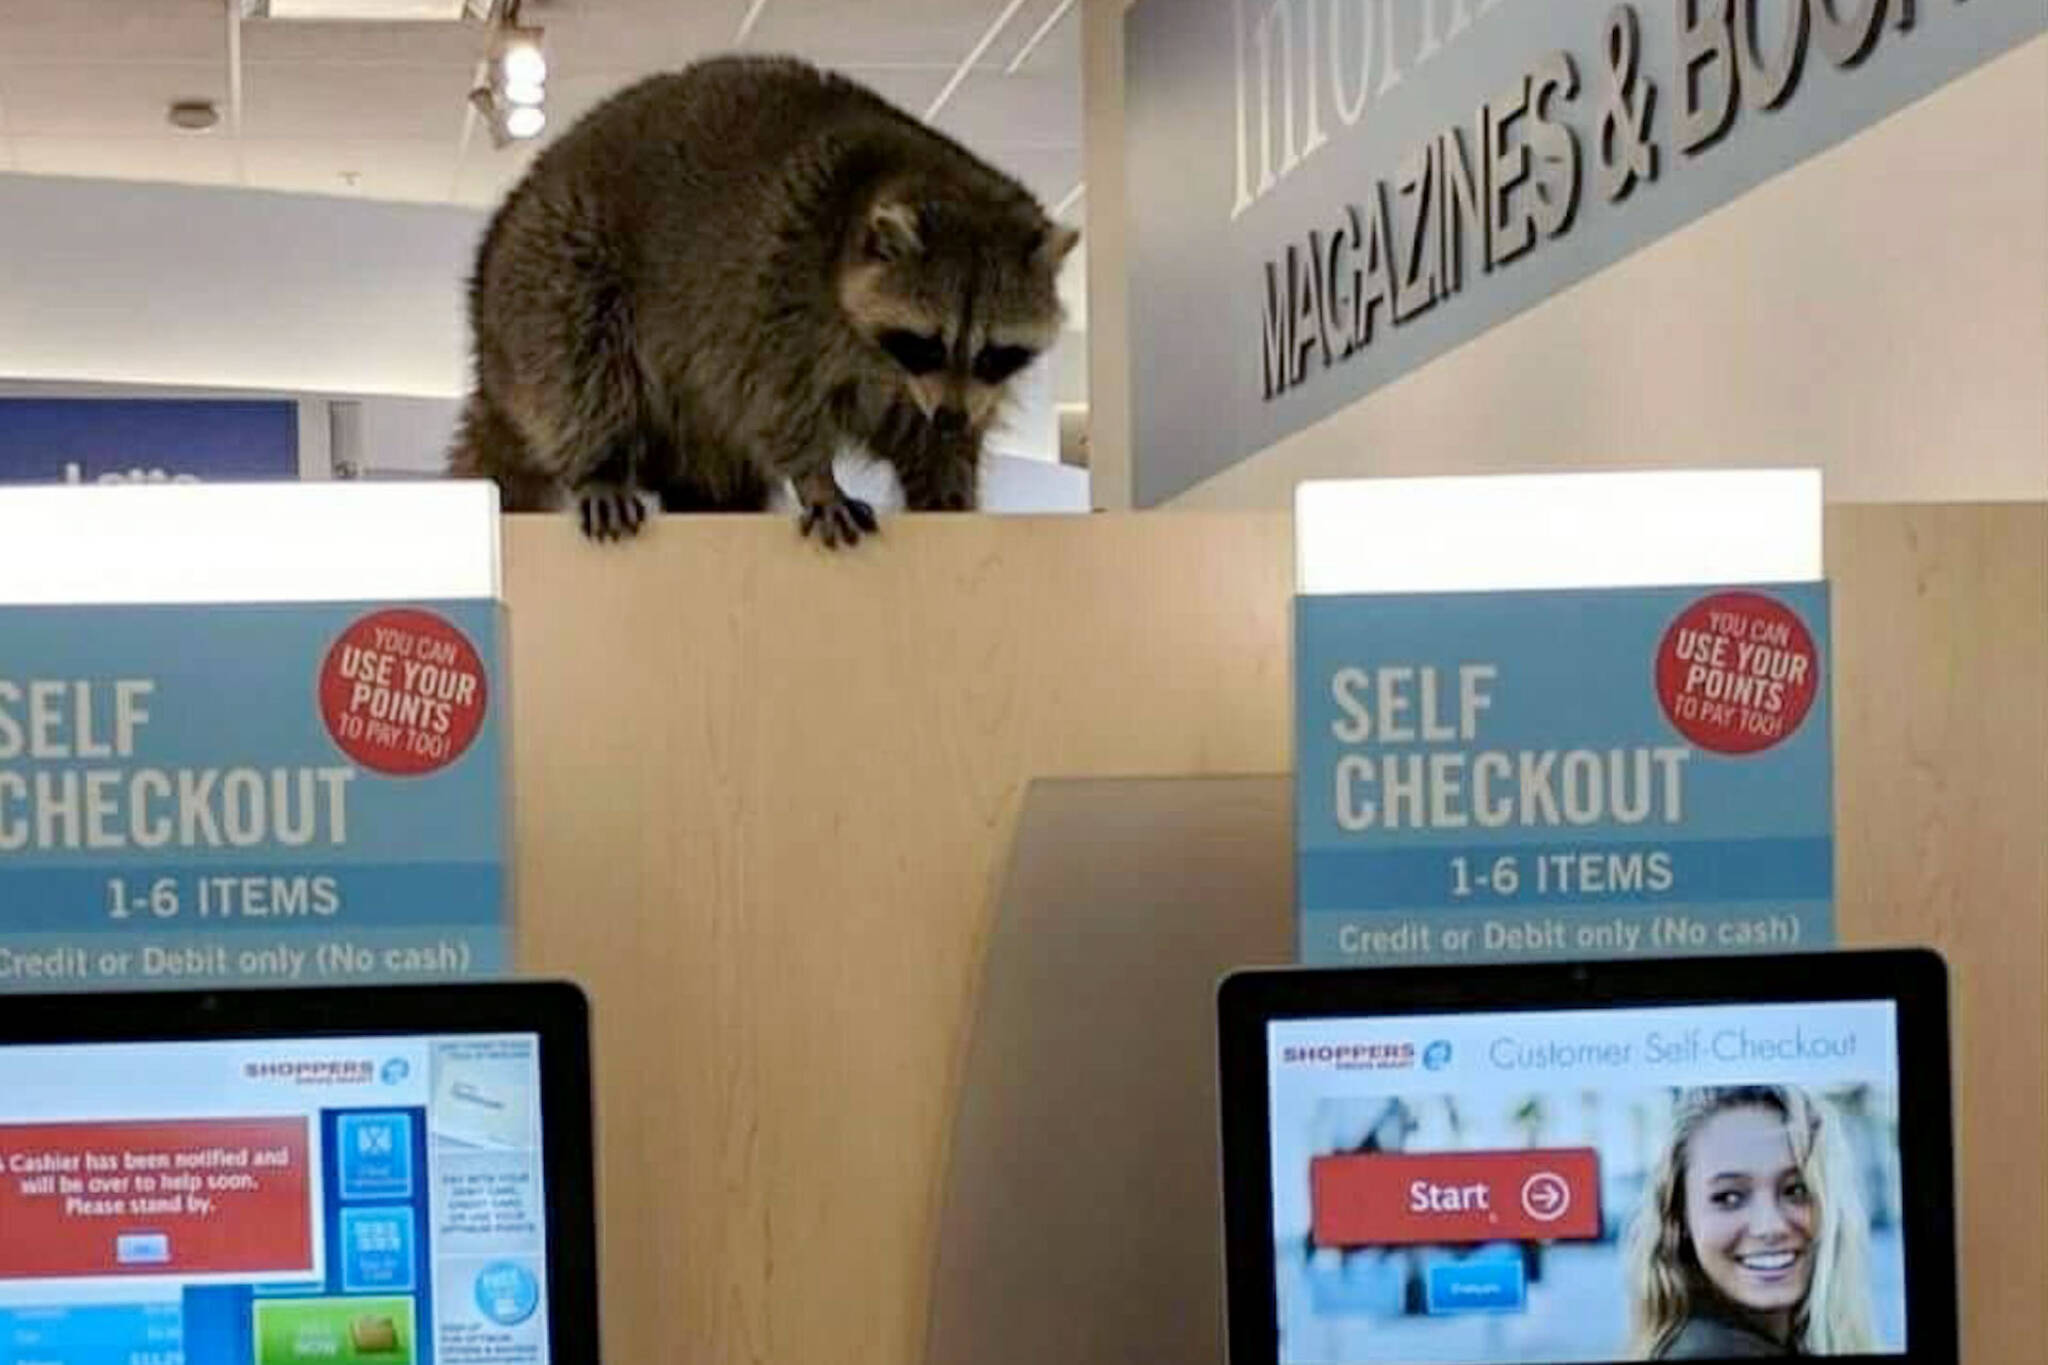 Toronto Raccoon Shoppers